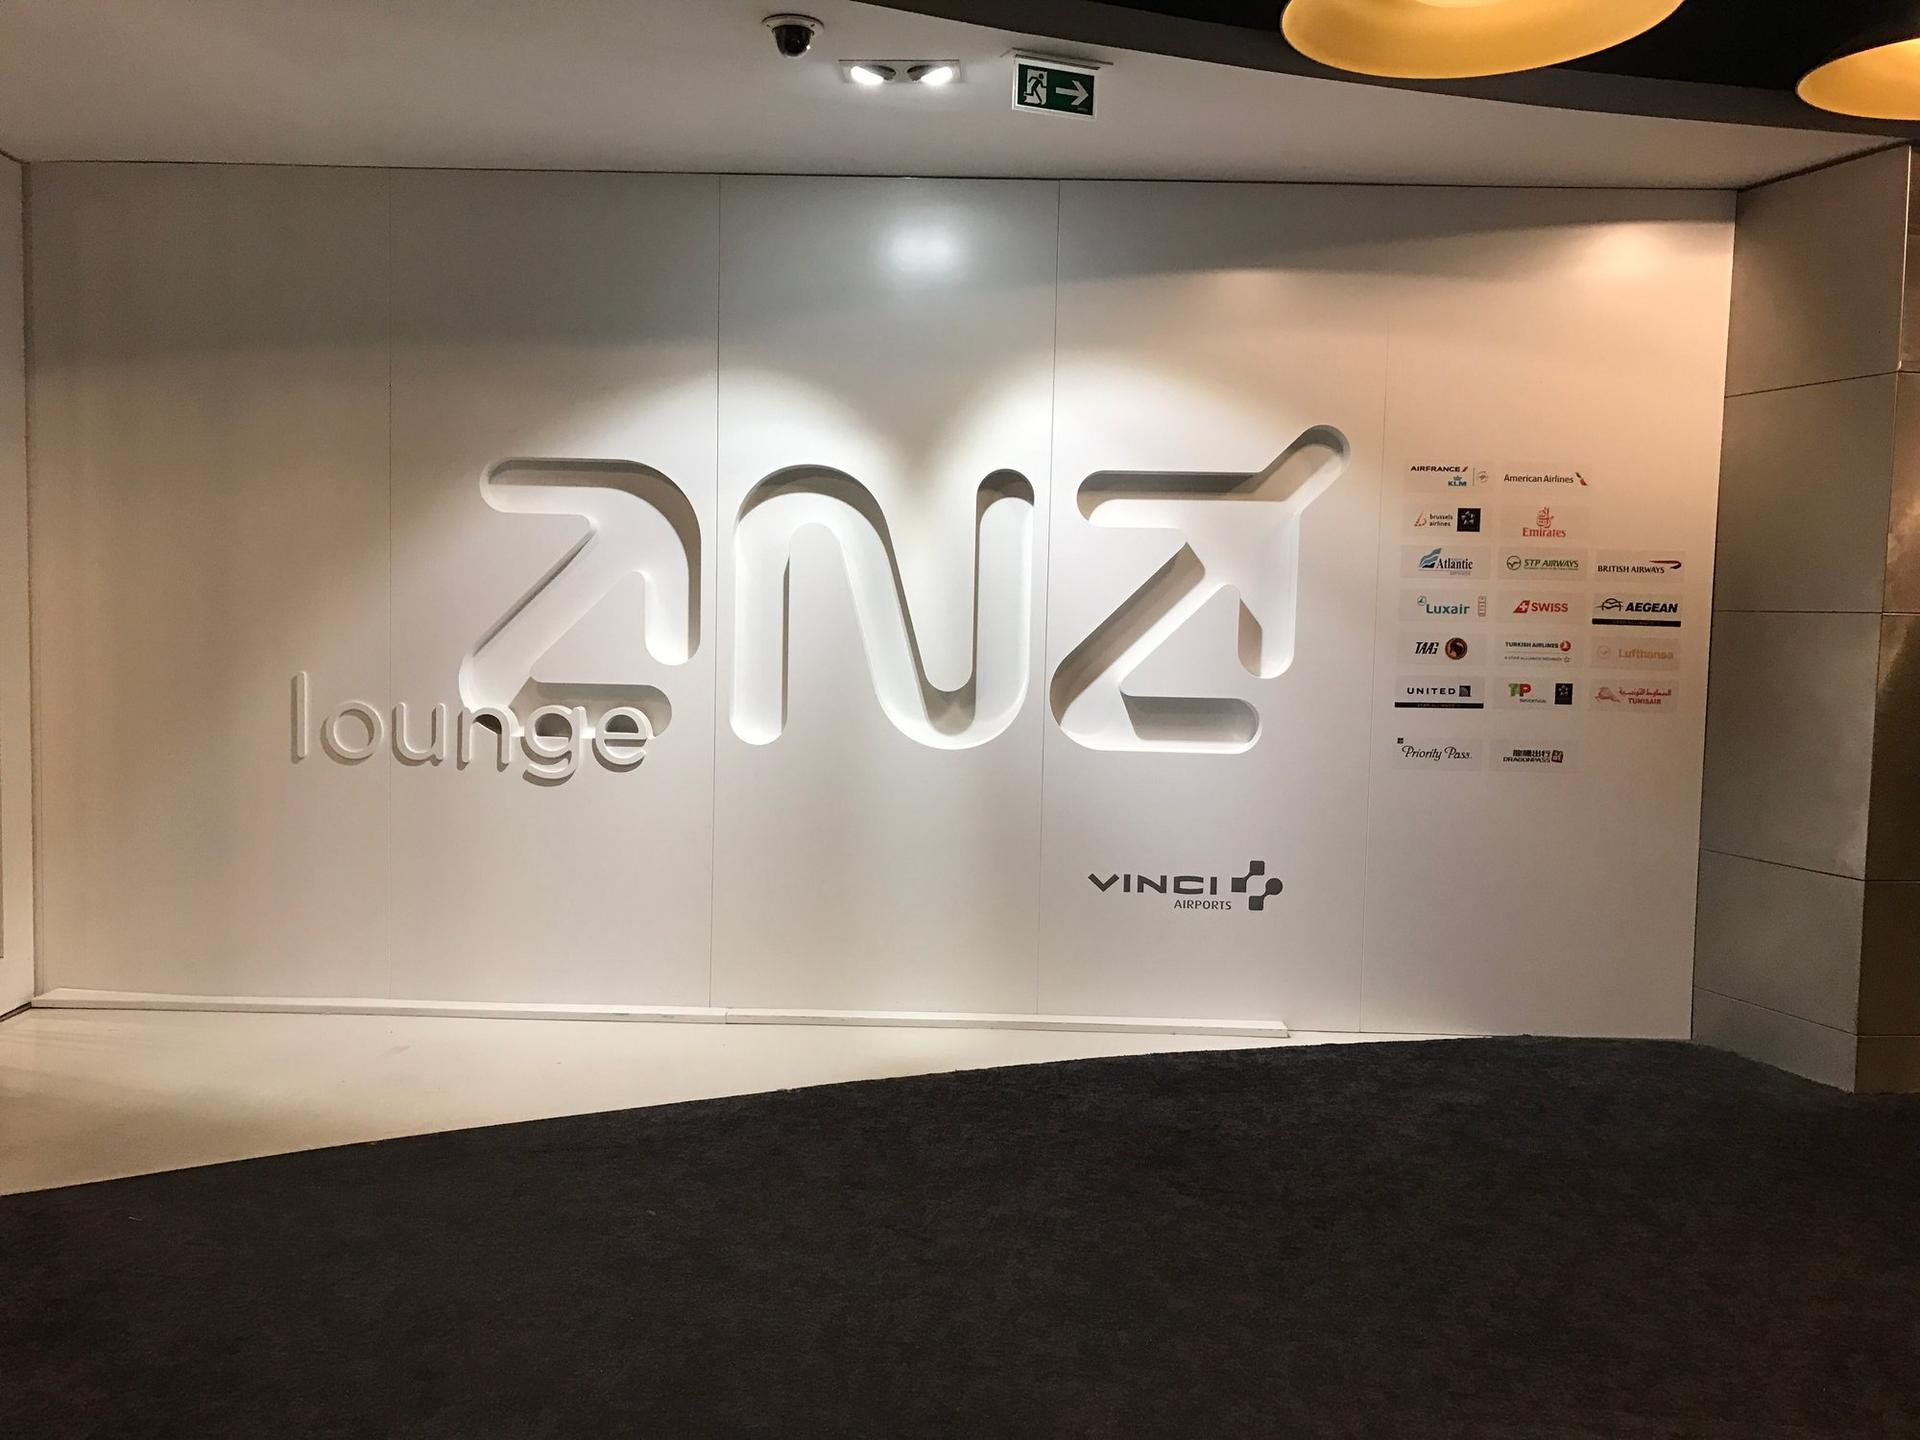 ANA Airport Lounge image 14 of 49